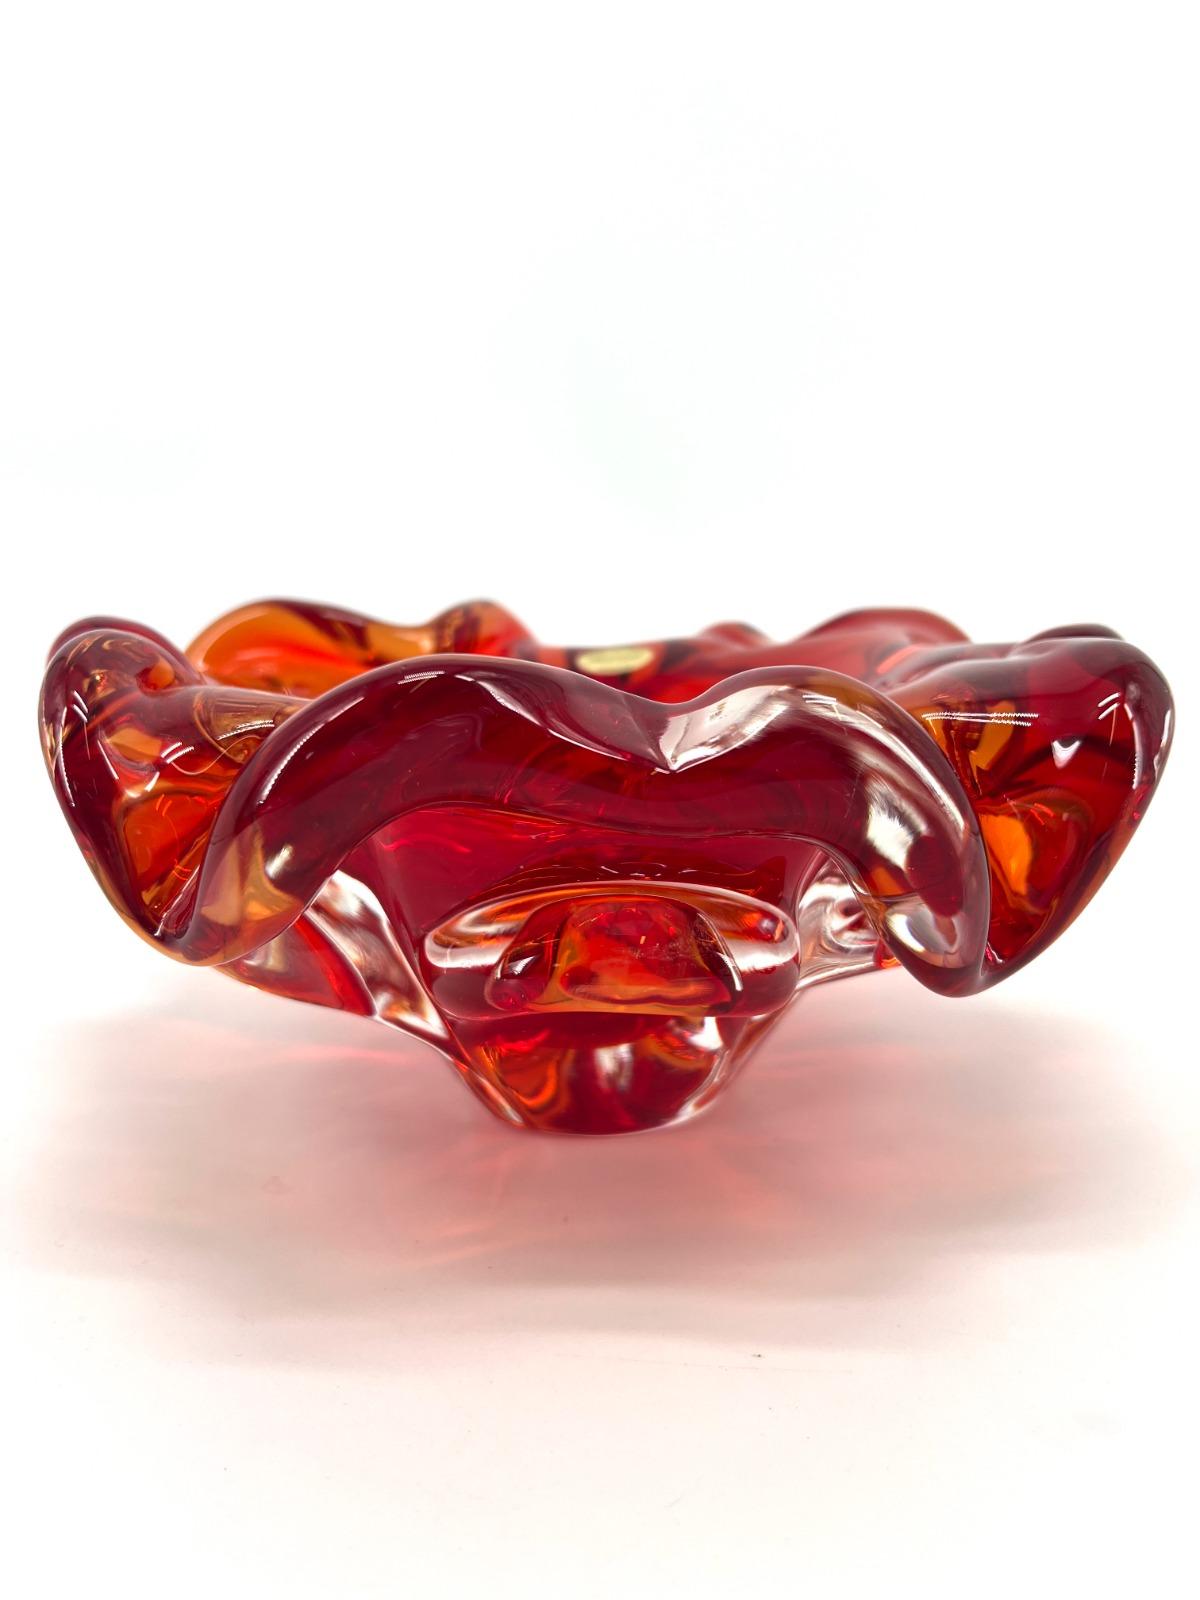 Cristal 1295 MURANO Centre de table en verre artistique soufflé de Murano rouge rubis en vente